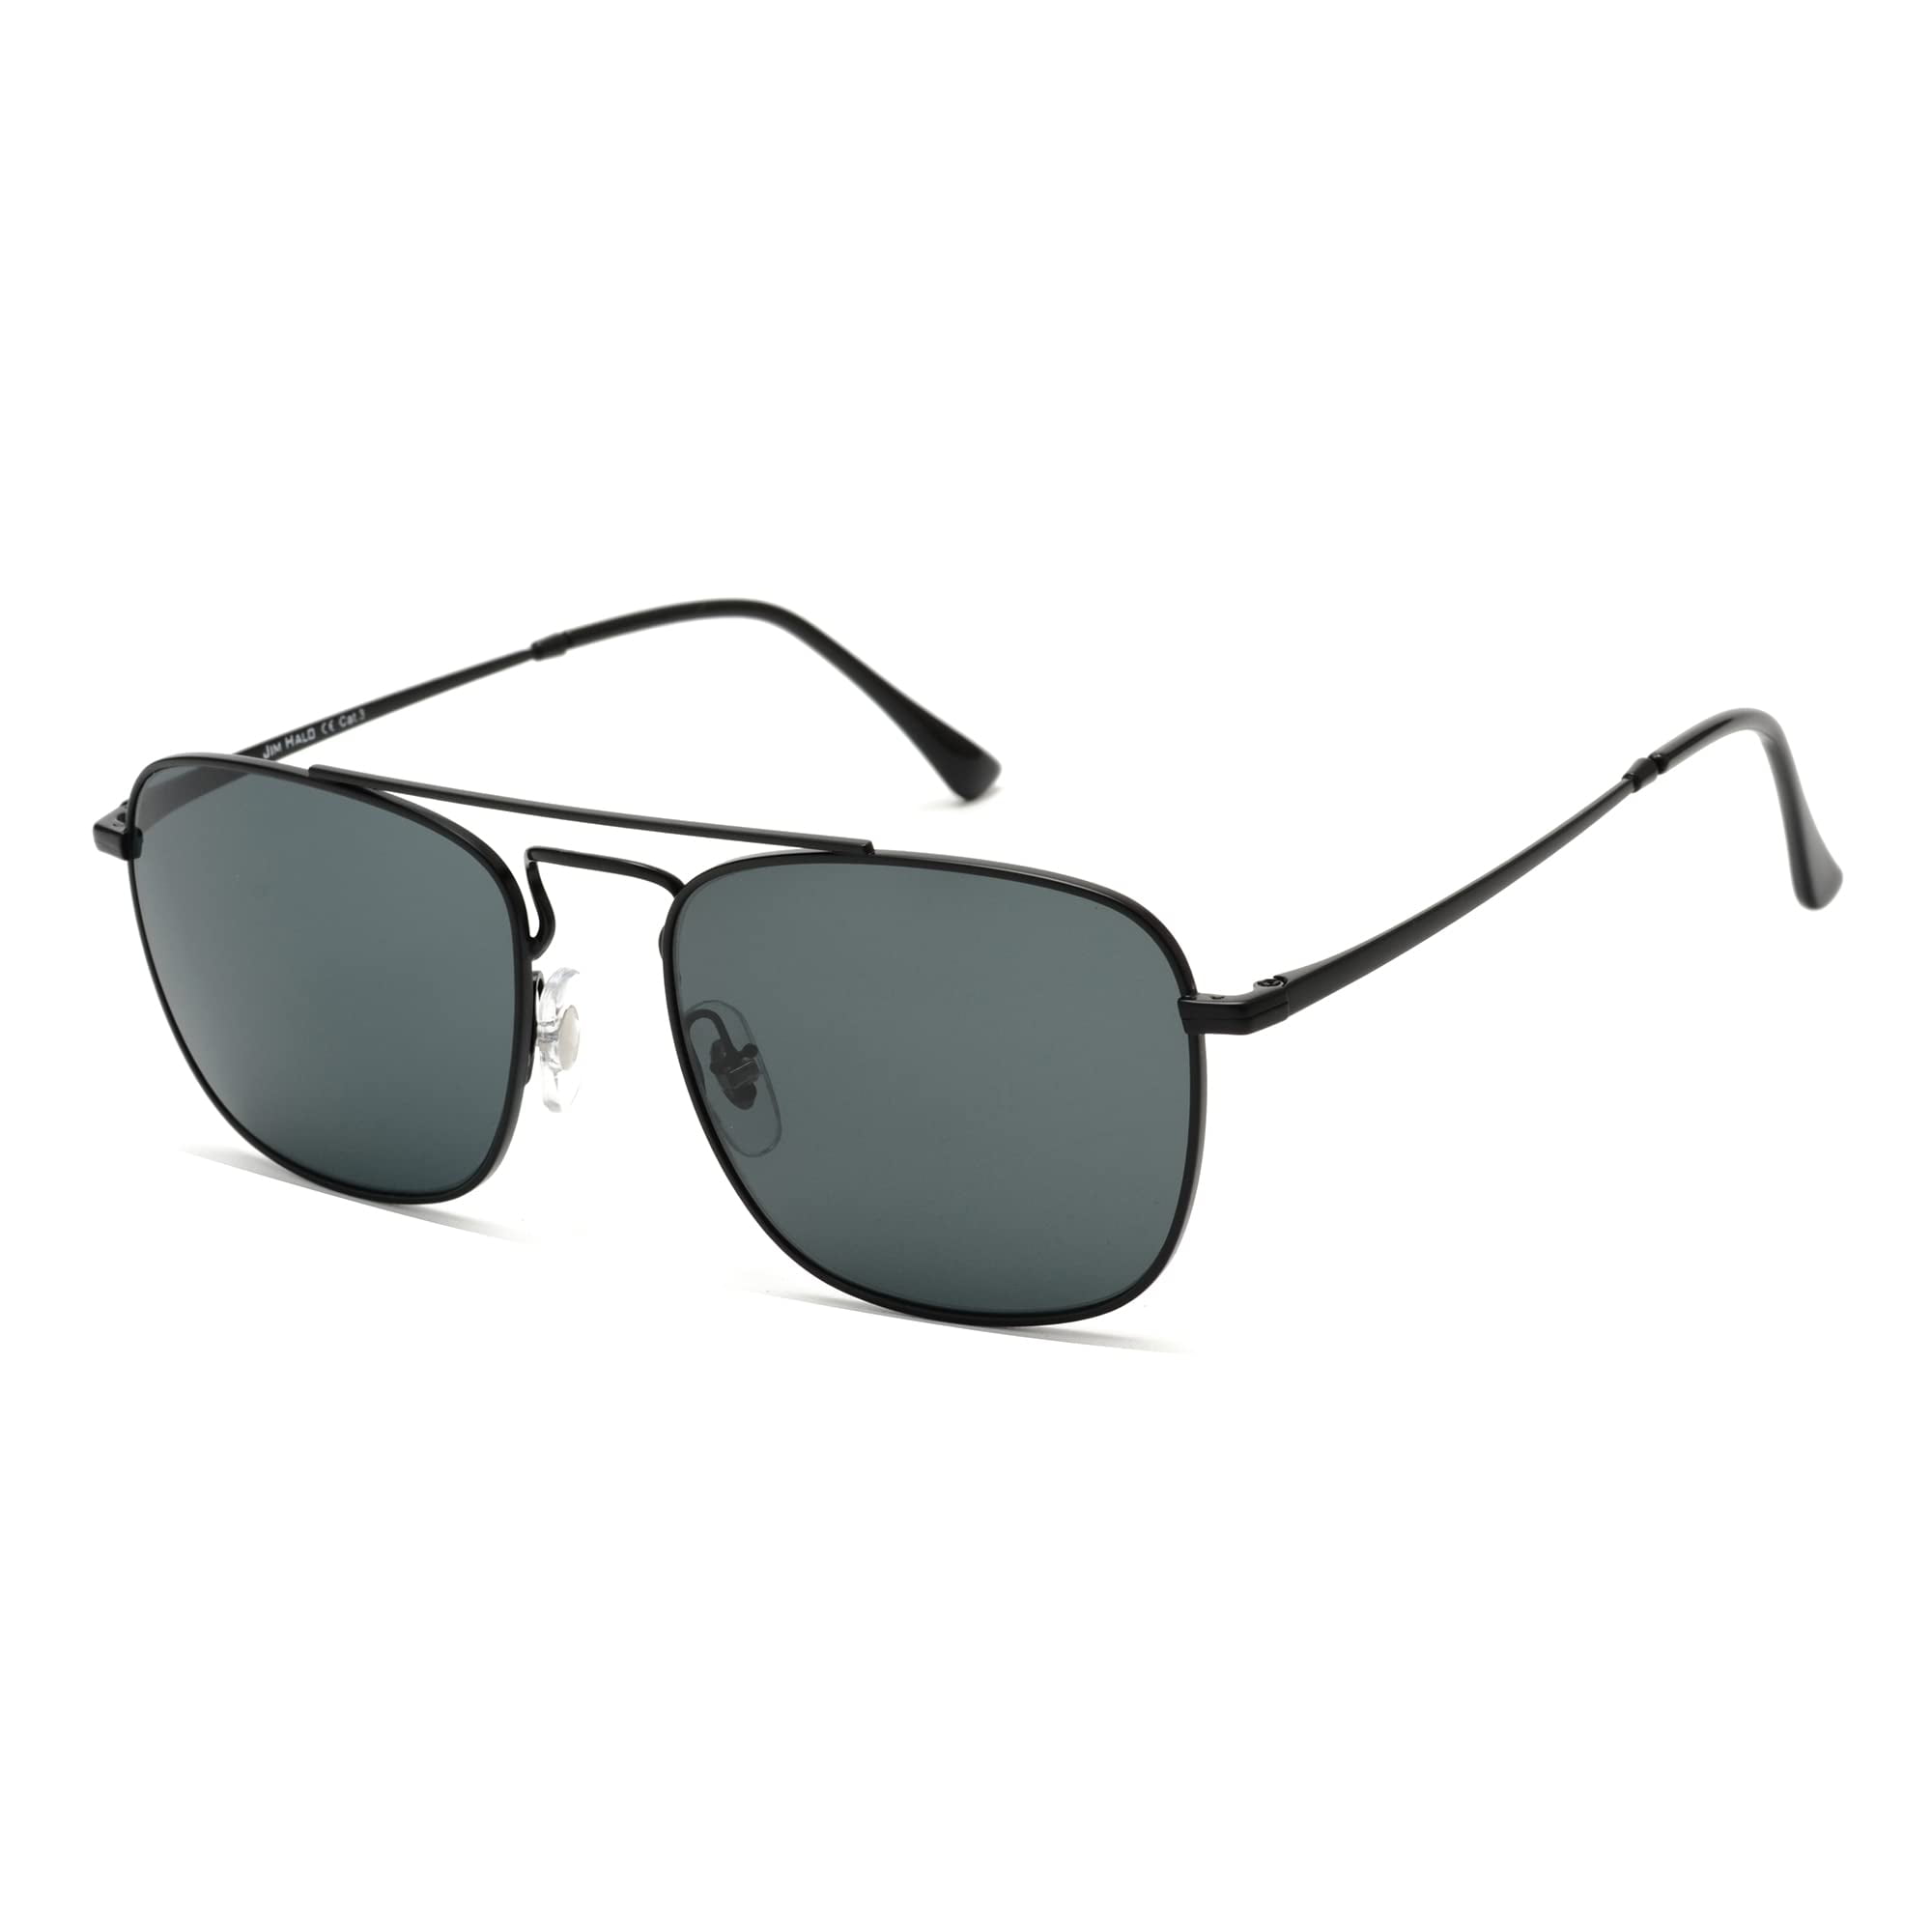 JIM HALO Retro Square Aviator Sunglasses Premium Glass Lens Flat Eyewear Men Women (Black / Grey) - Walmart.com